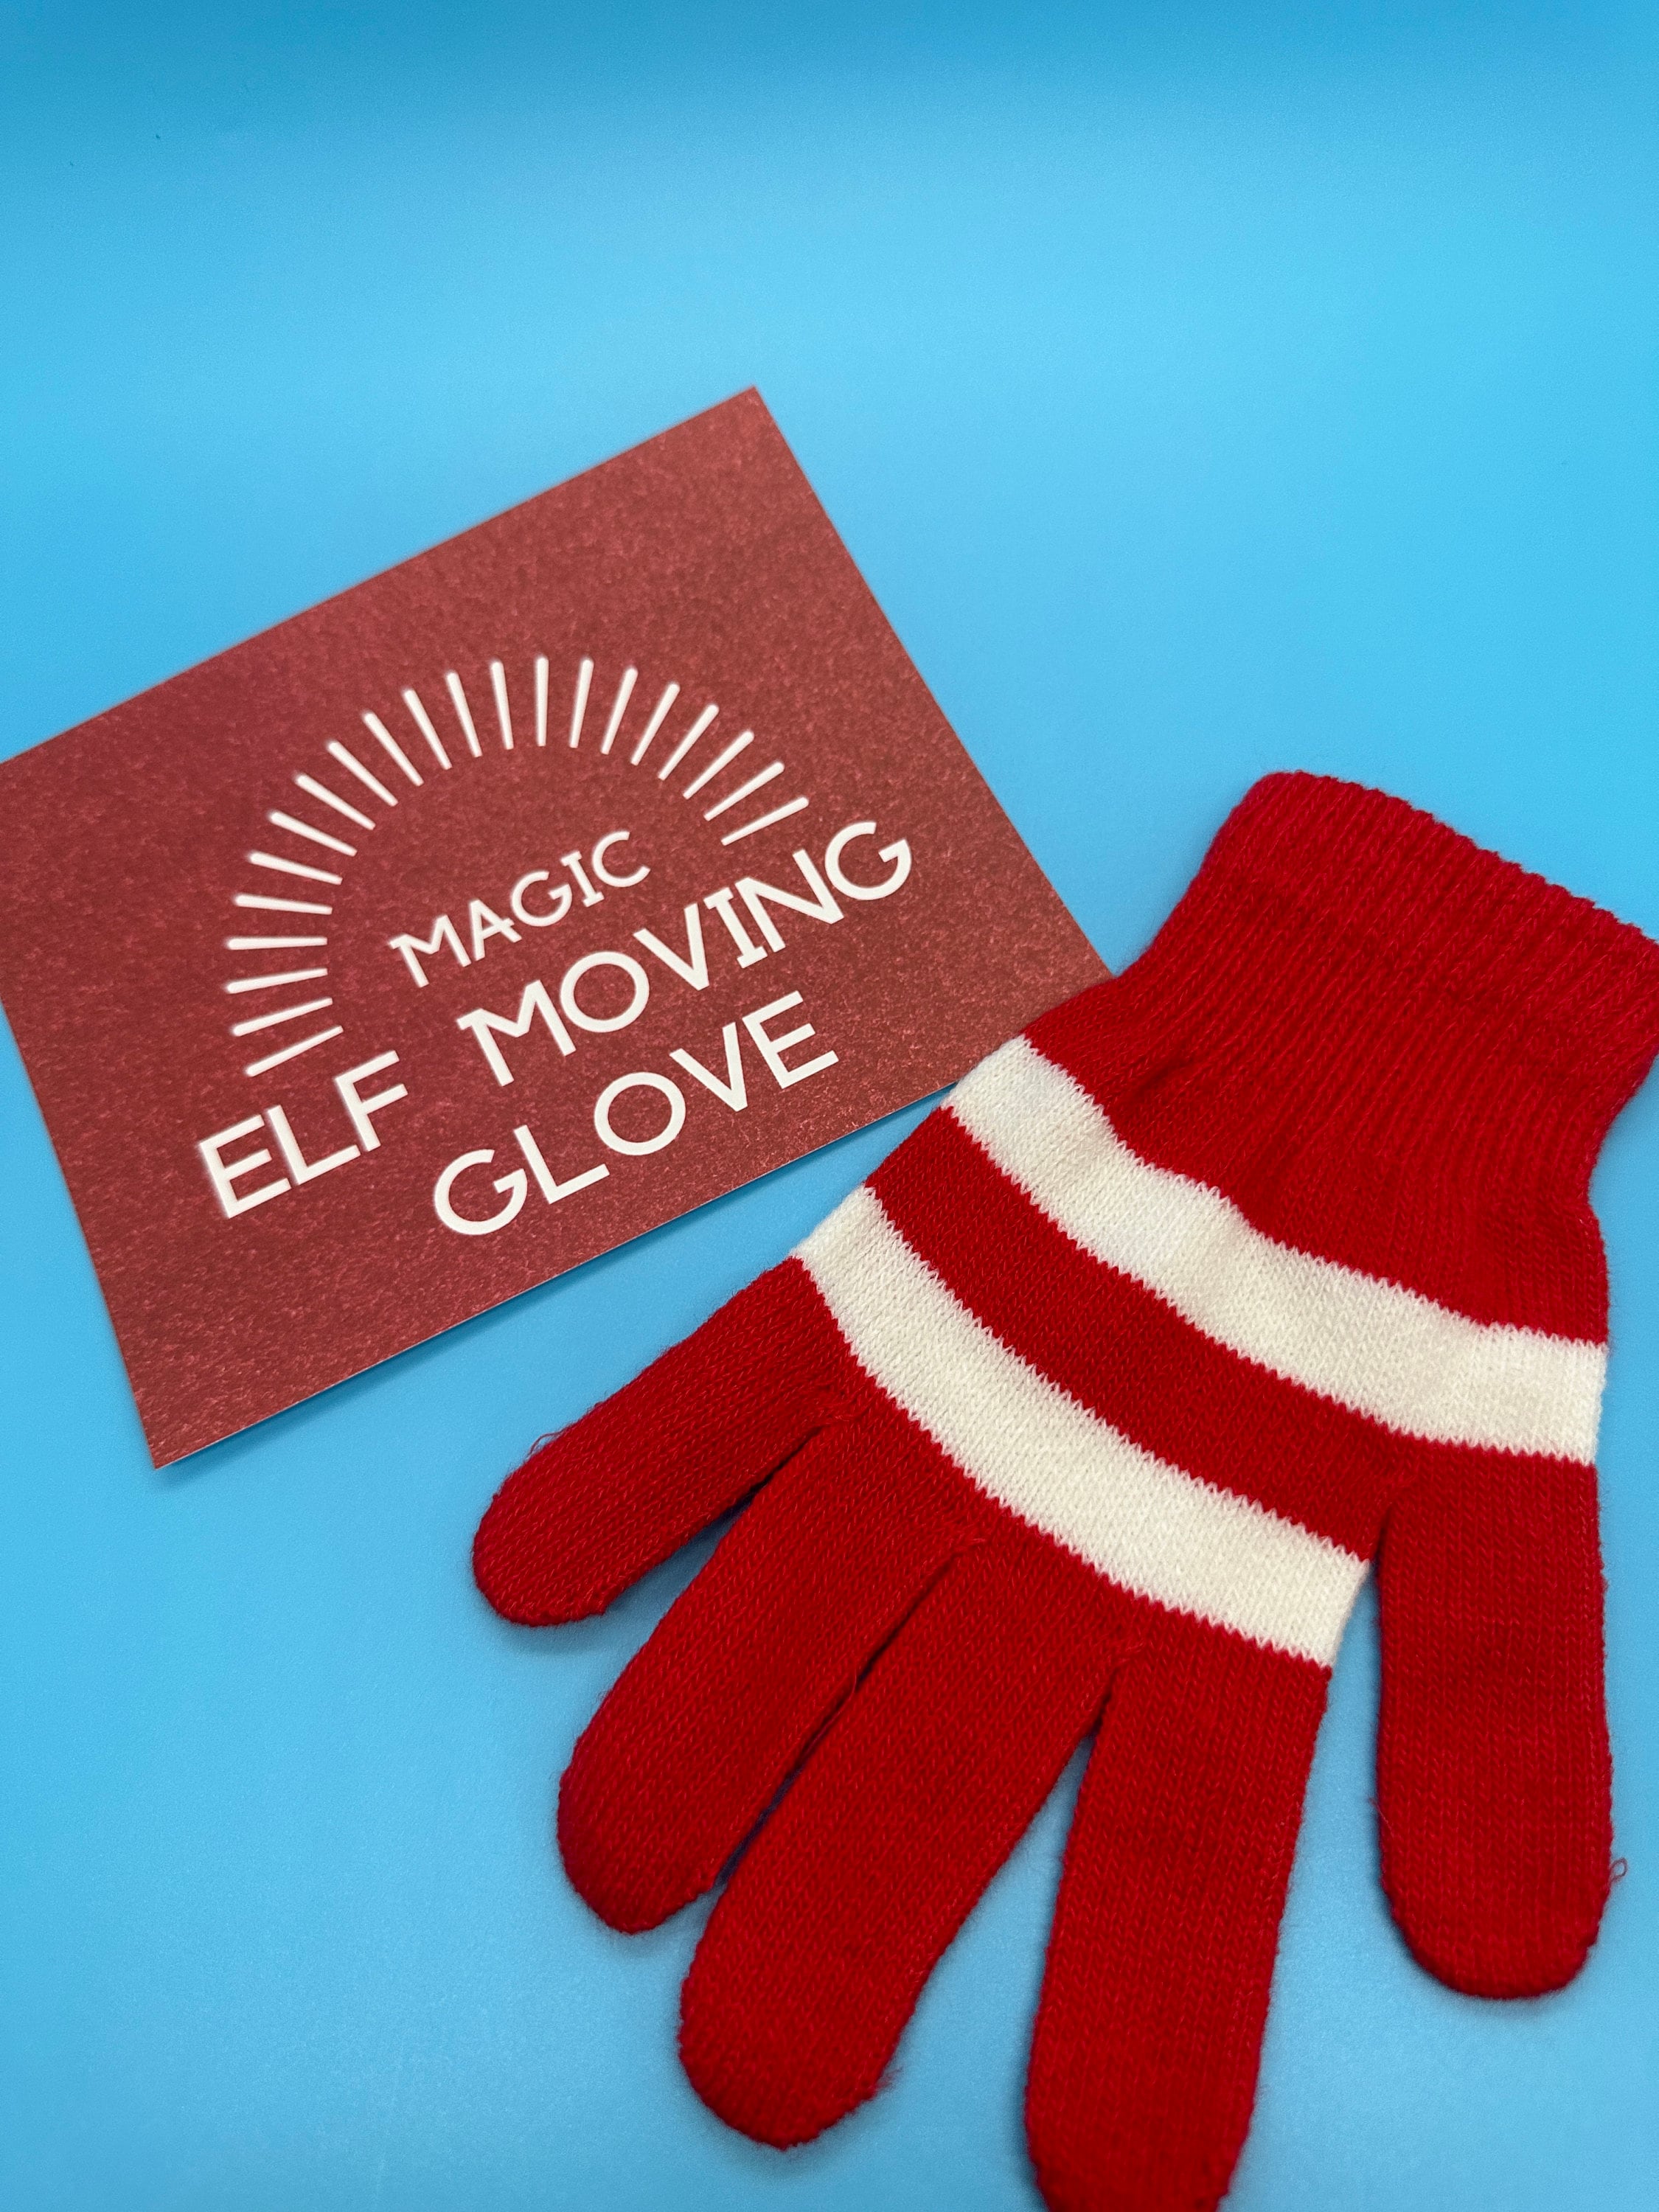 Magic Elf Moving Glove – SleepyMommyShop